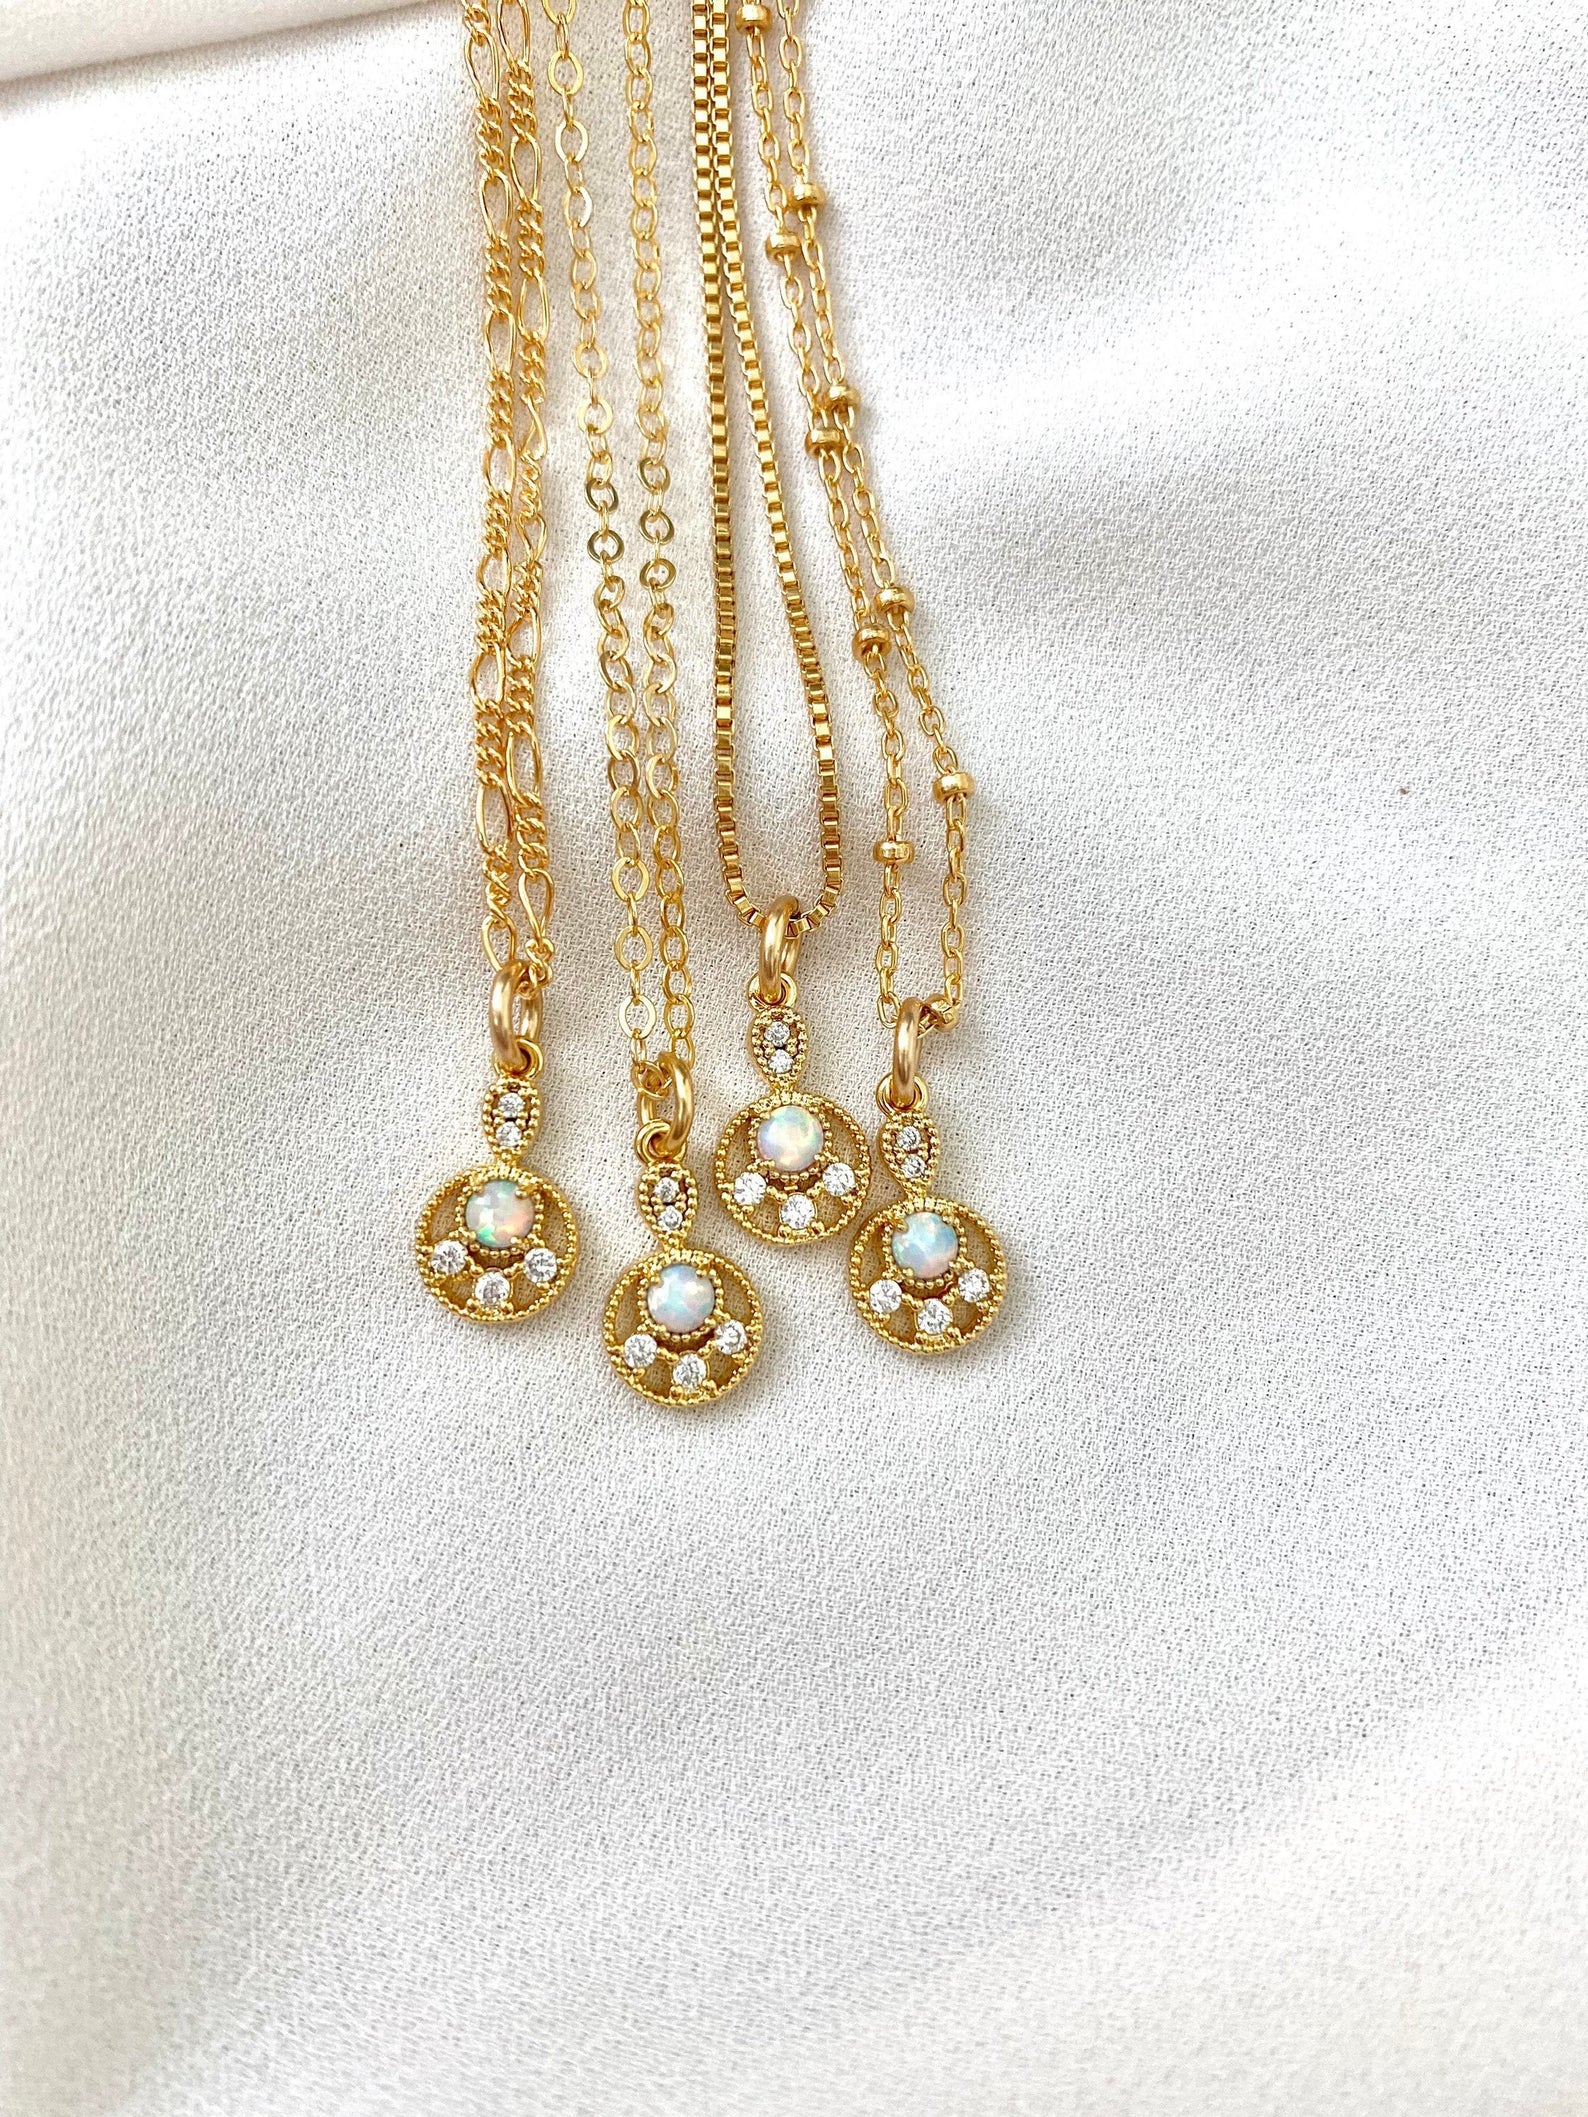 Ultra Dainty Opal Pendant Necklace - Art Deco Style Jewelry - October Birthstone